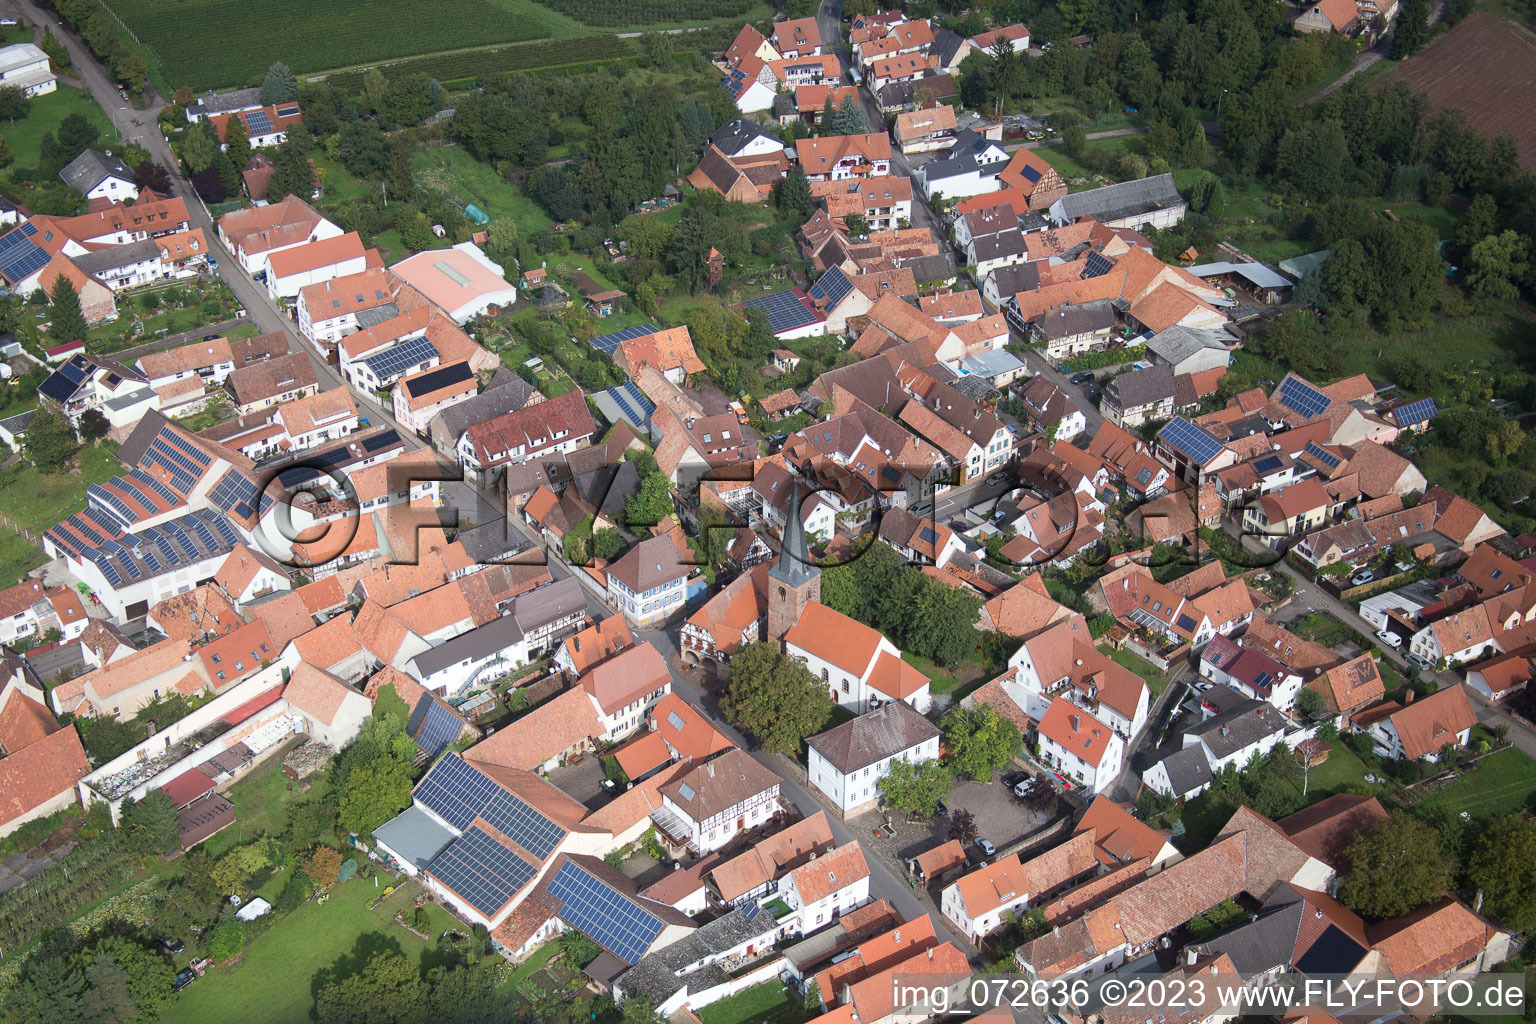 Quartier Heuchelheim in Heuchelheim-Klingen dans le département Rhénanie-Palatinat, Allemagne vue du ciel